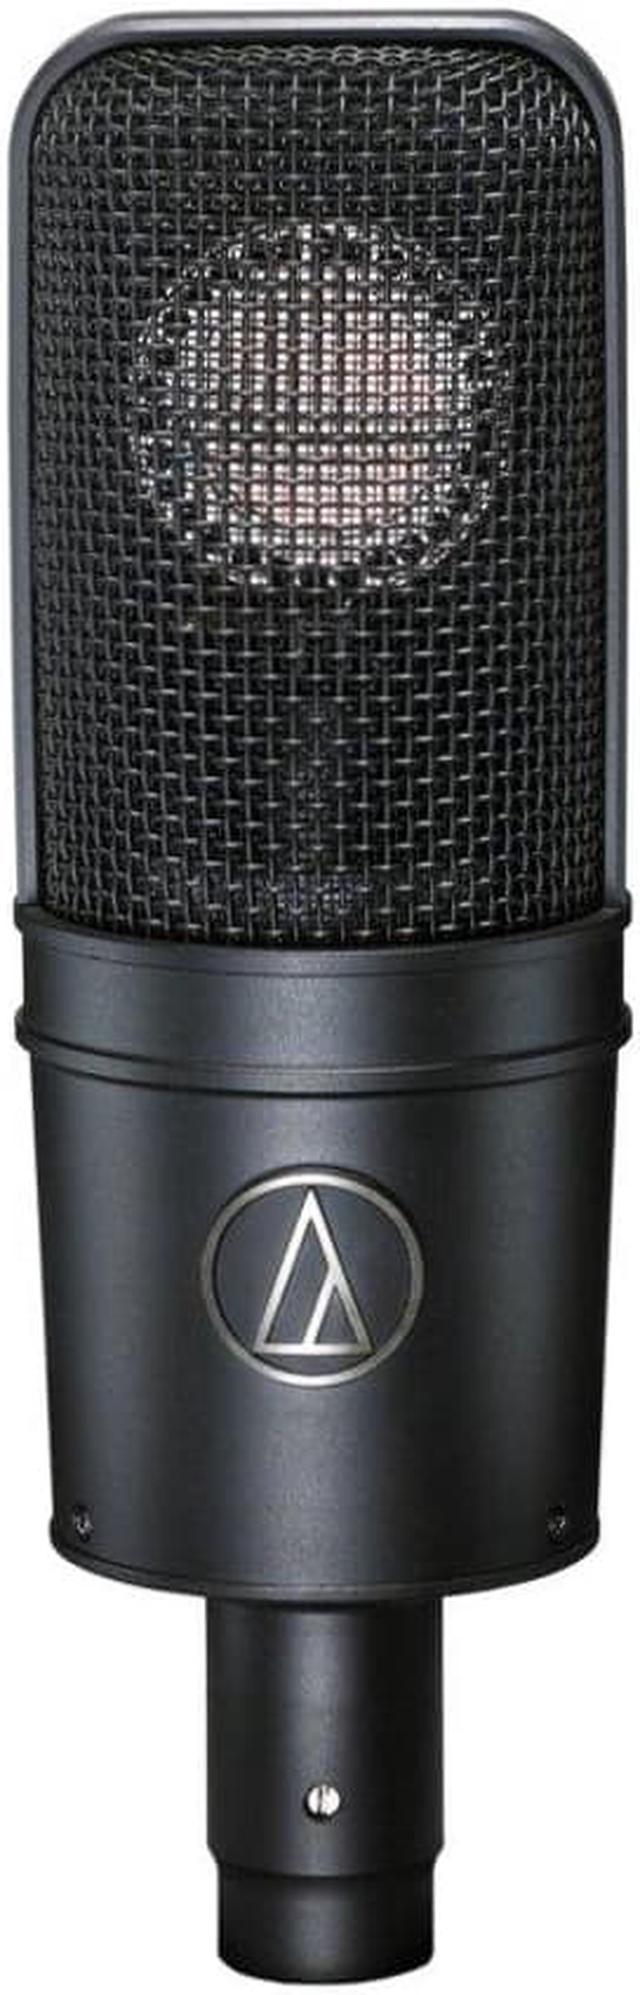 Audio Technica AT4040 Condenser Microphone Microphones - Newegg.com